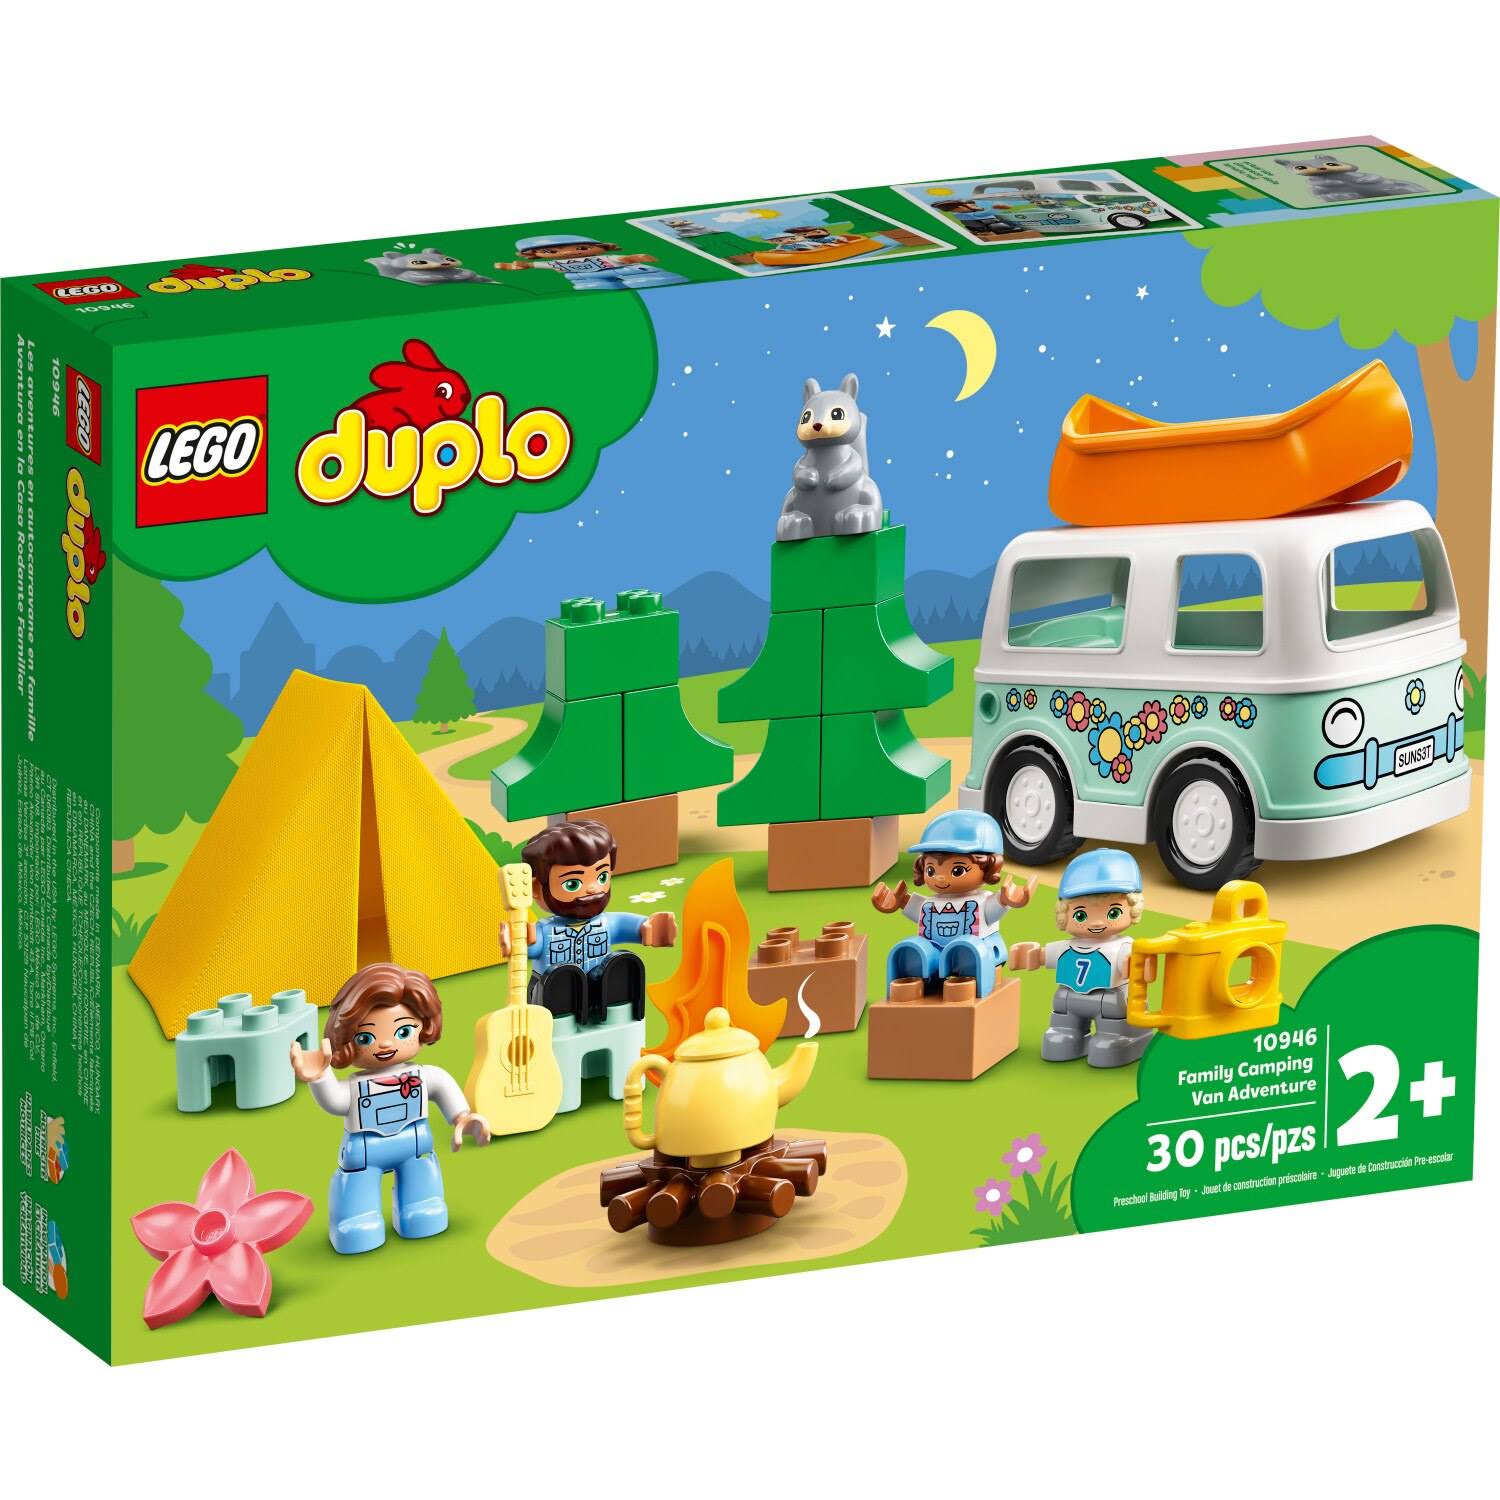 LEGO - 10946 | Duplo: Family Camping Van Adventure